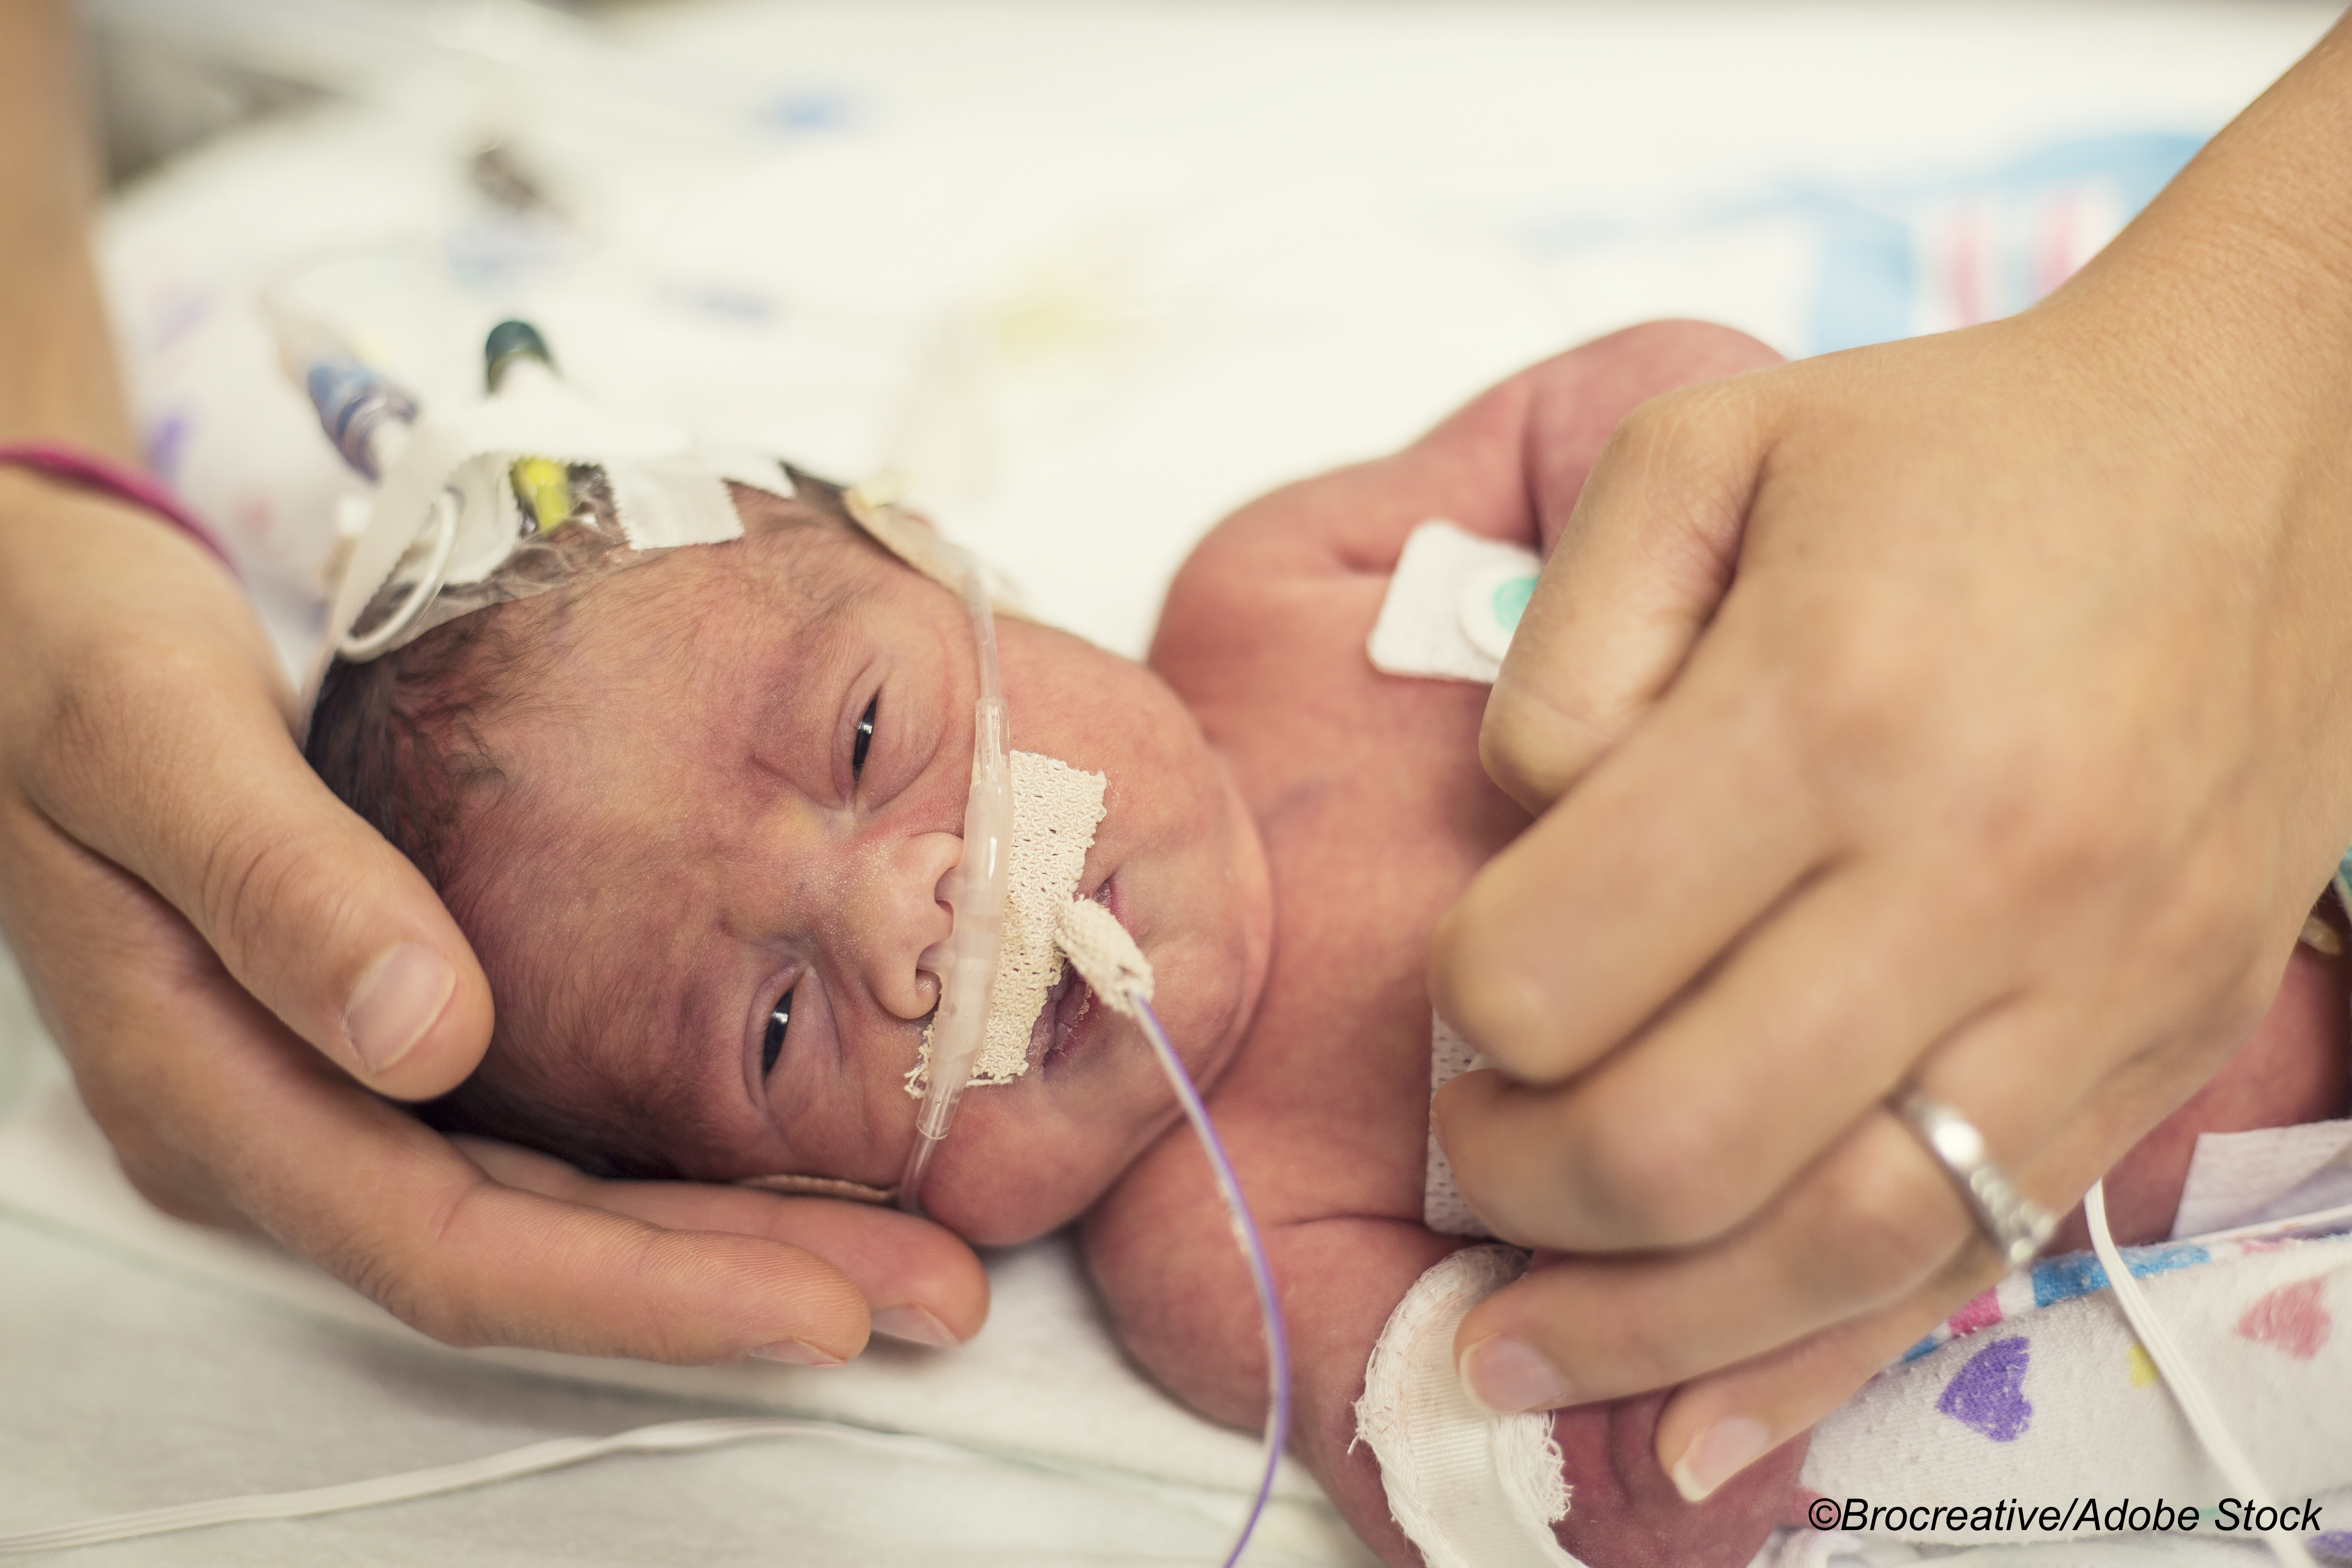 Neonatal Seizures: Little Difference Between EEG/Clinical Treatment